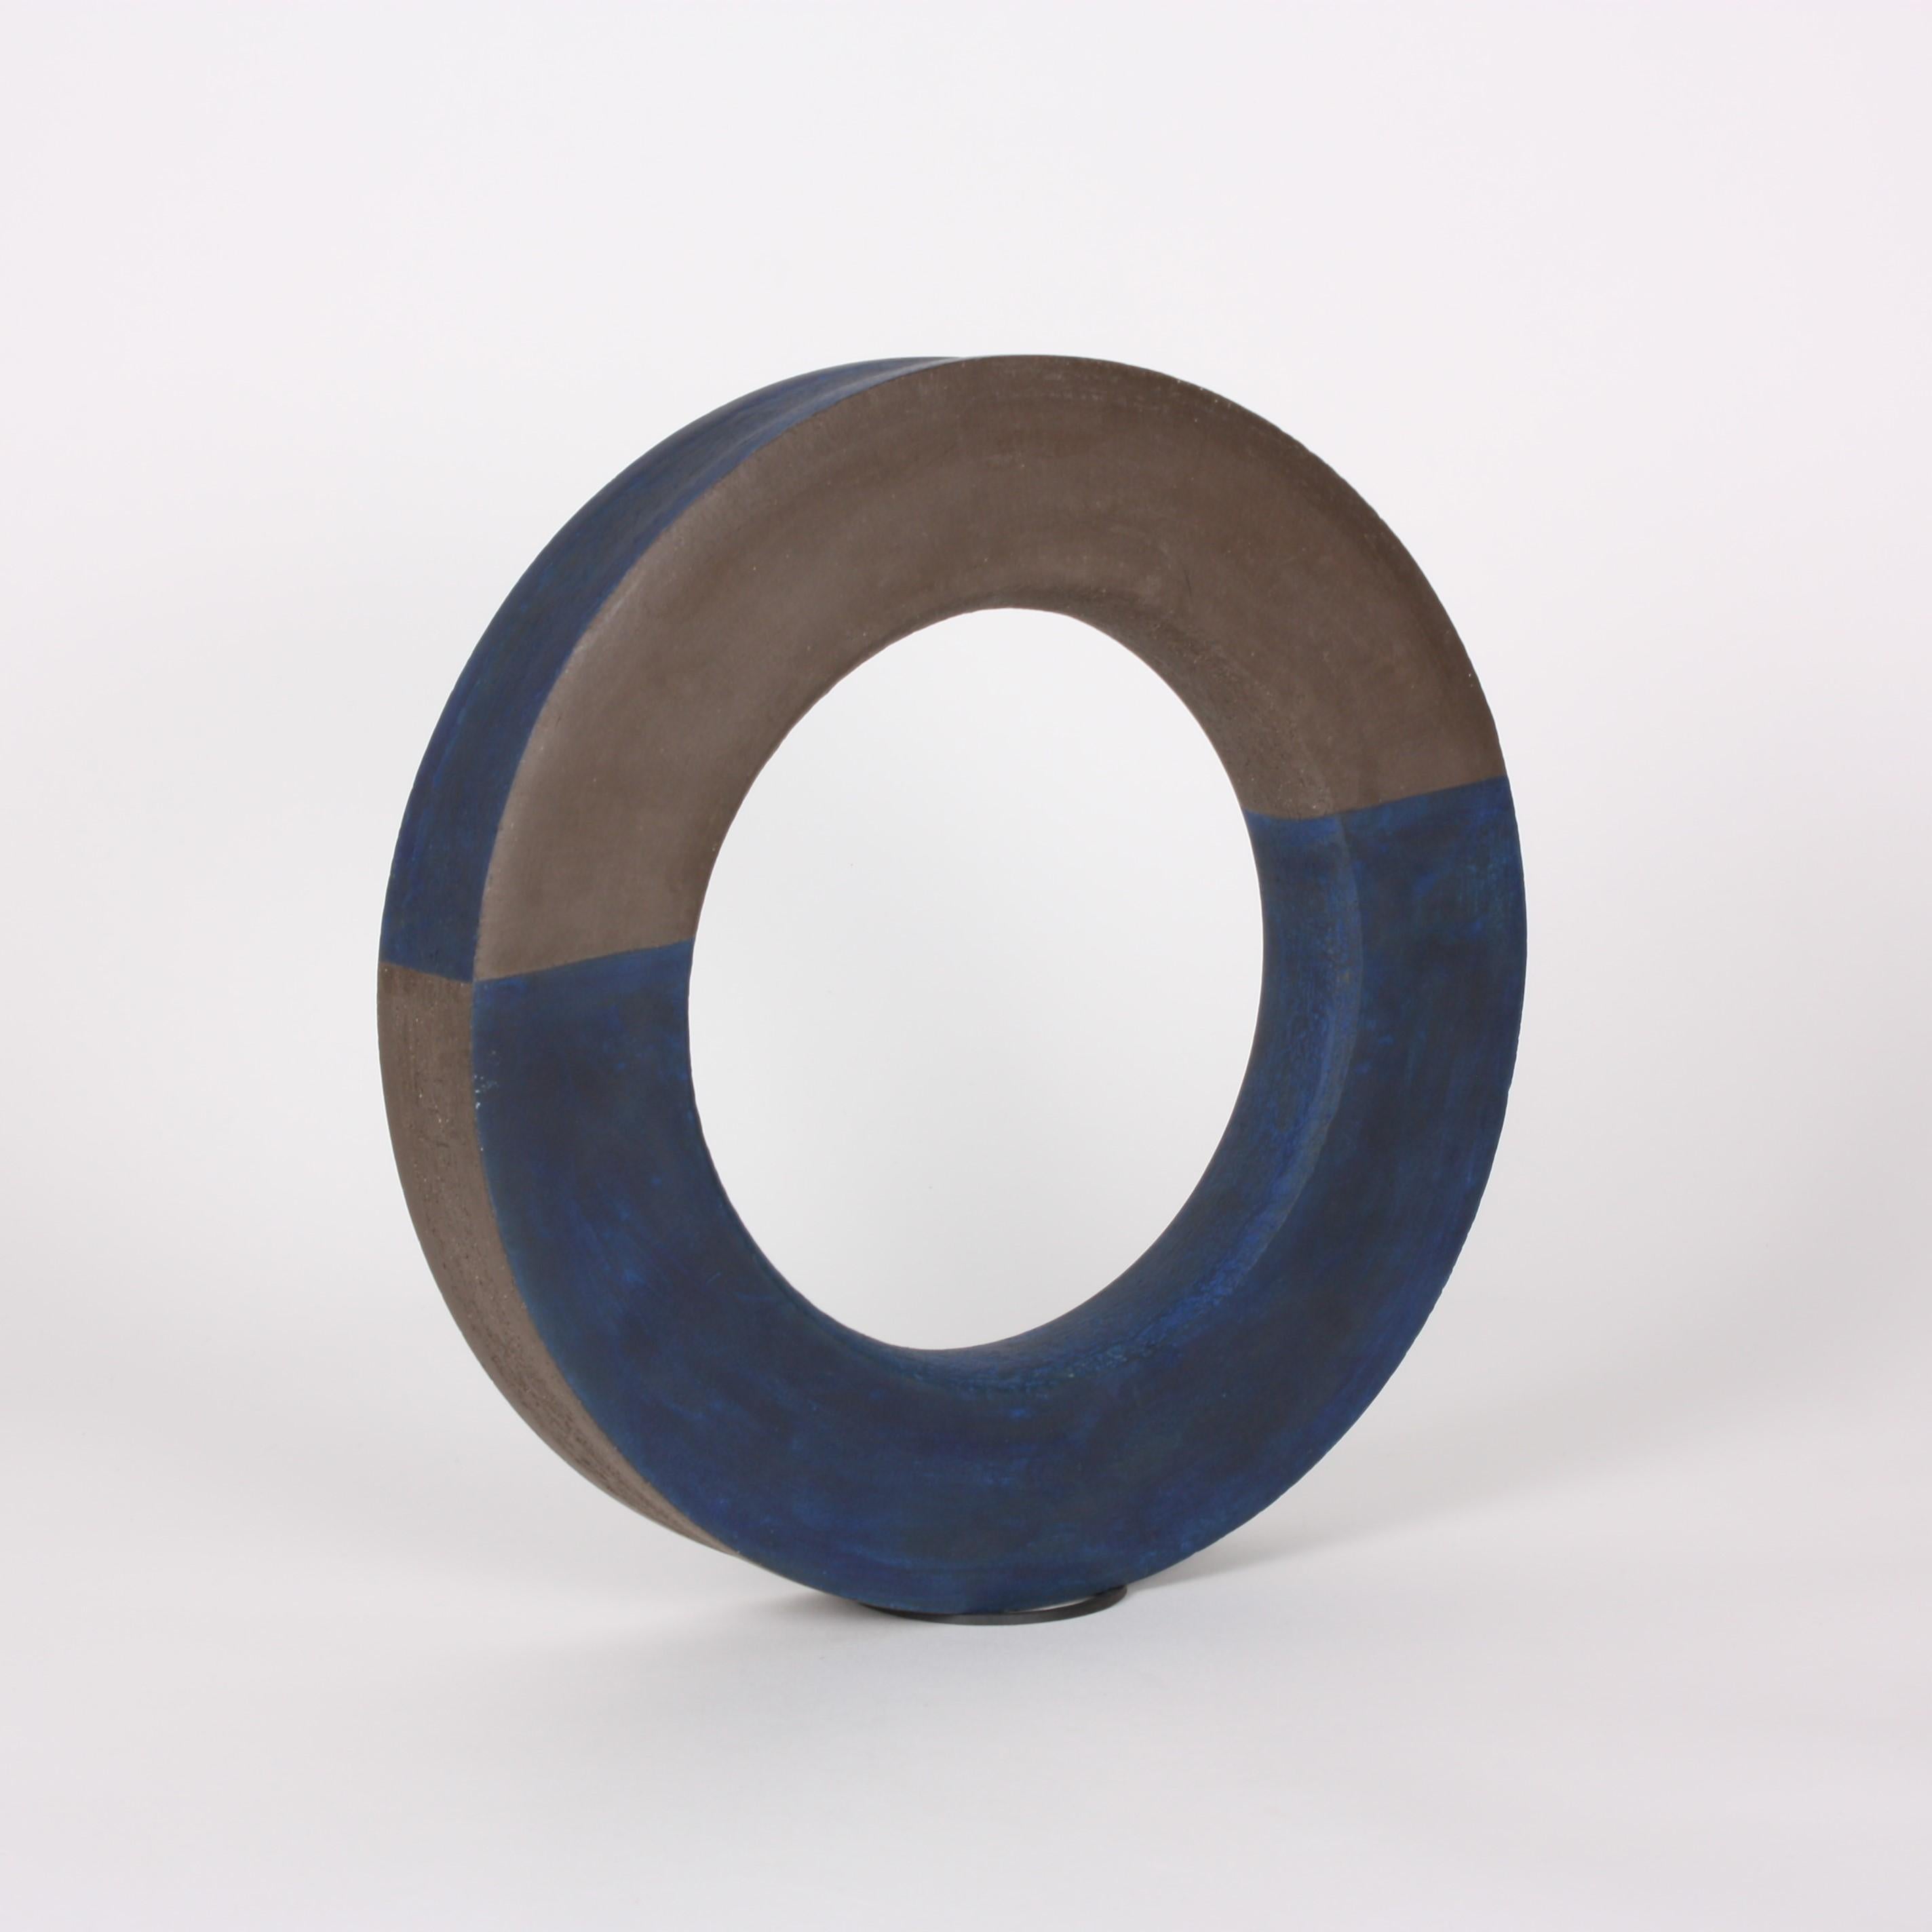 Hand-Crafted Contemporary Ceramic Sculpture, Anneau Arc Bleu